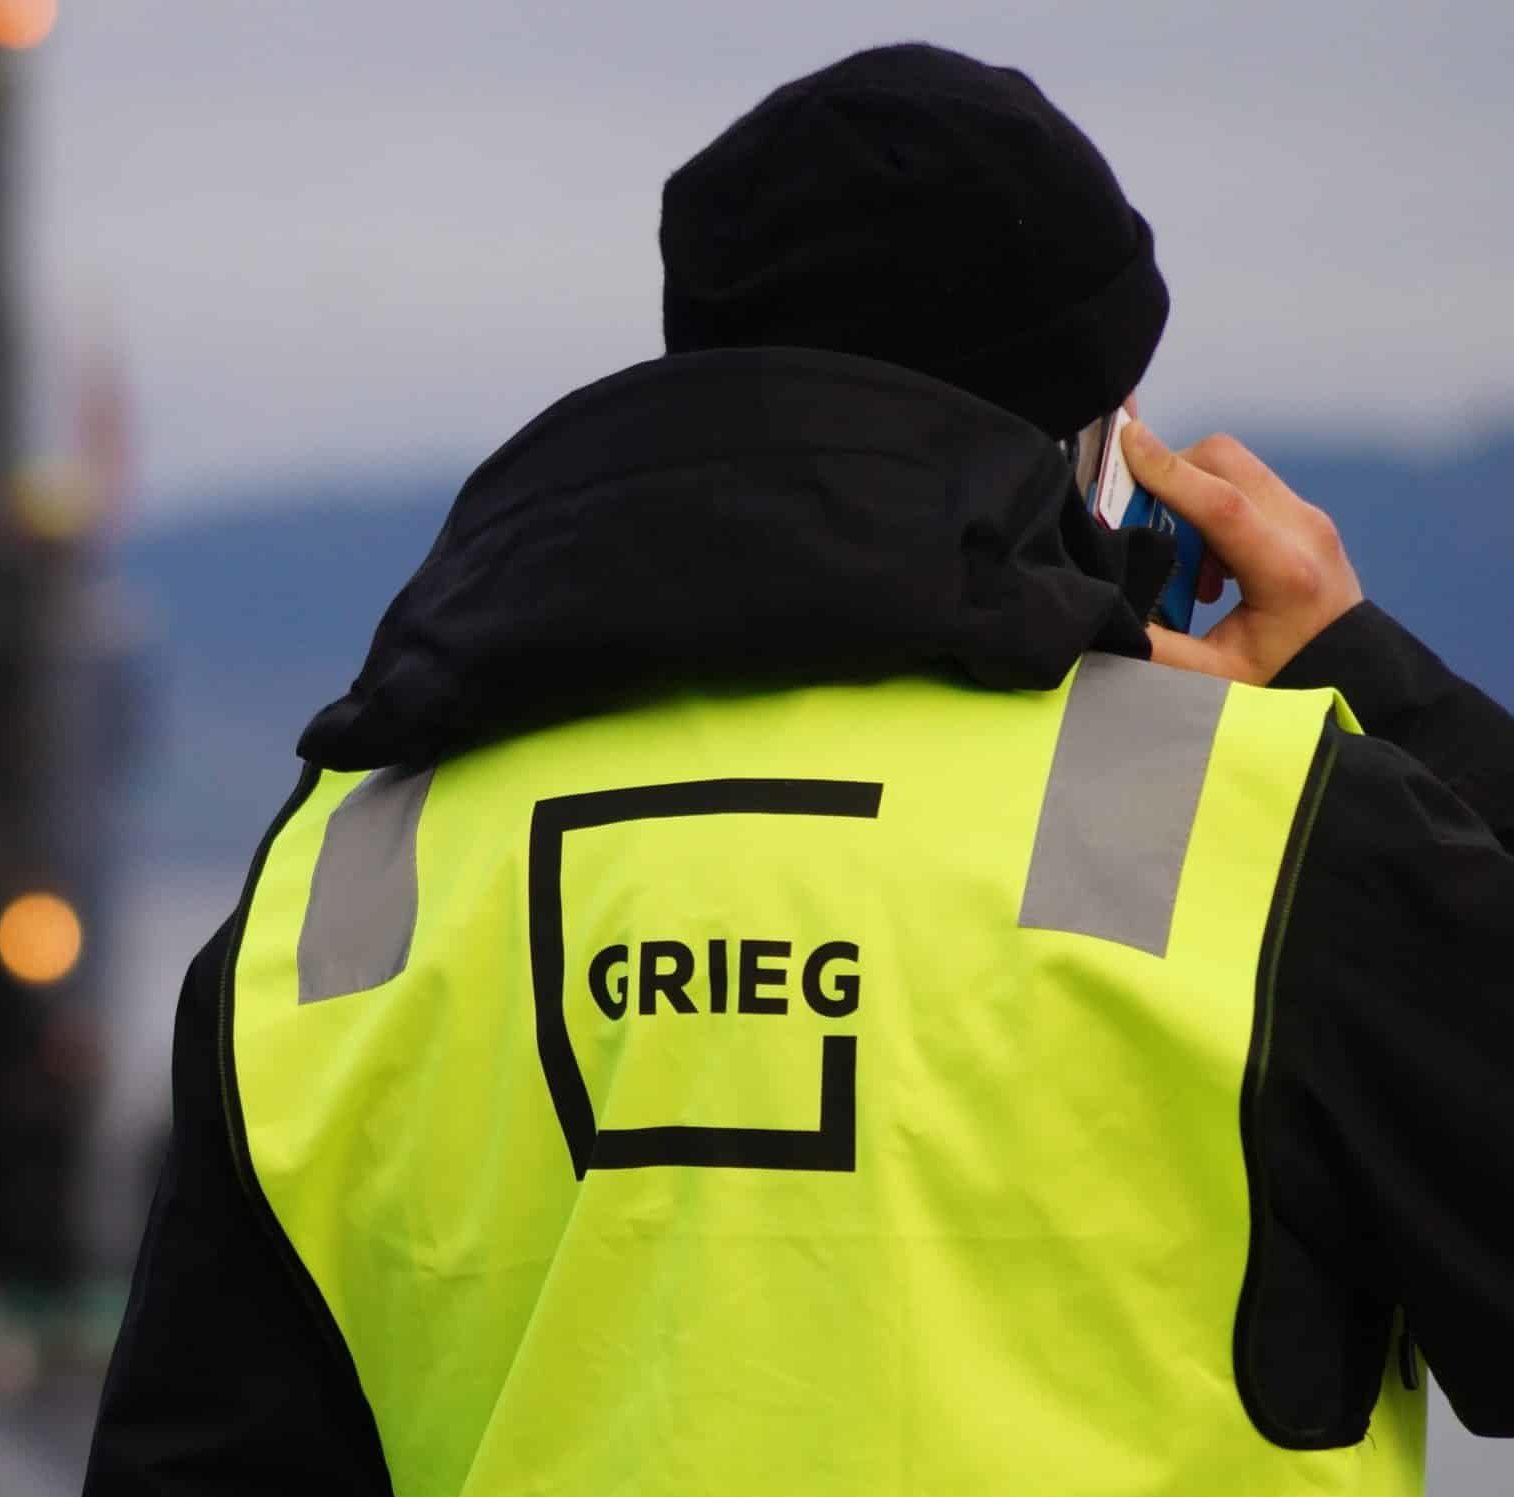 A male worker wearing a Grieg reflective vest.